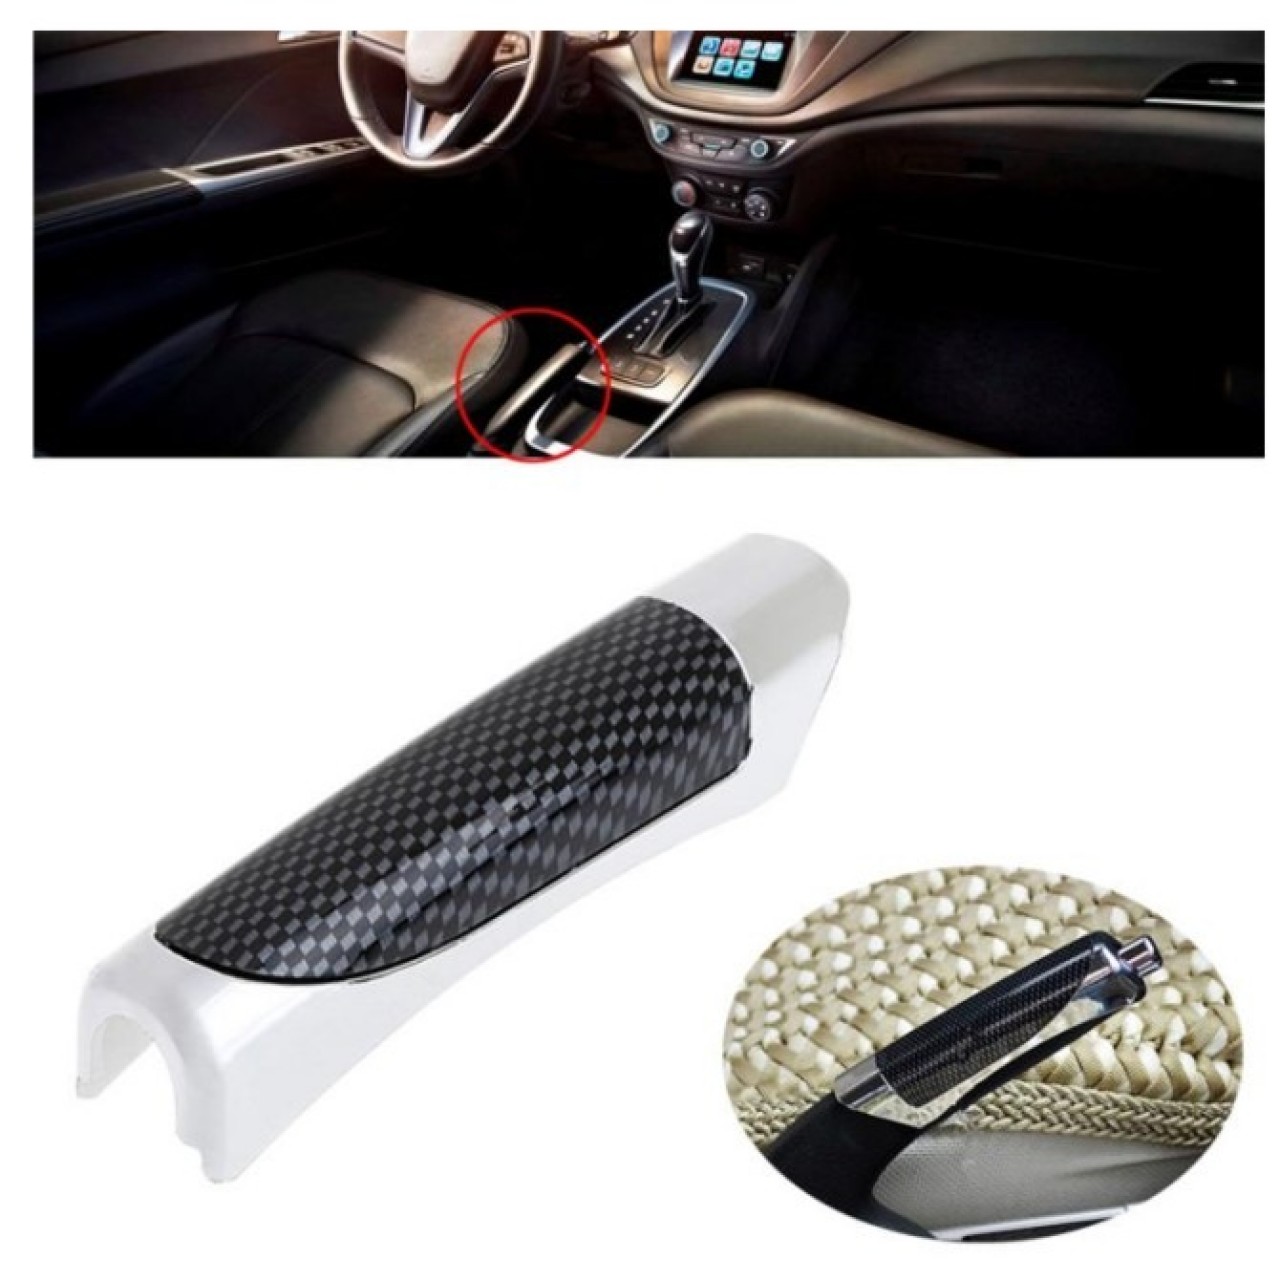 Universal Carbon fiber Style Car Hand brake protective cover sleeve case Decor